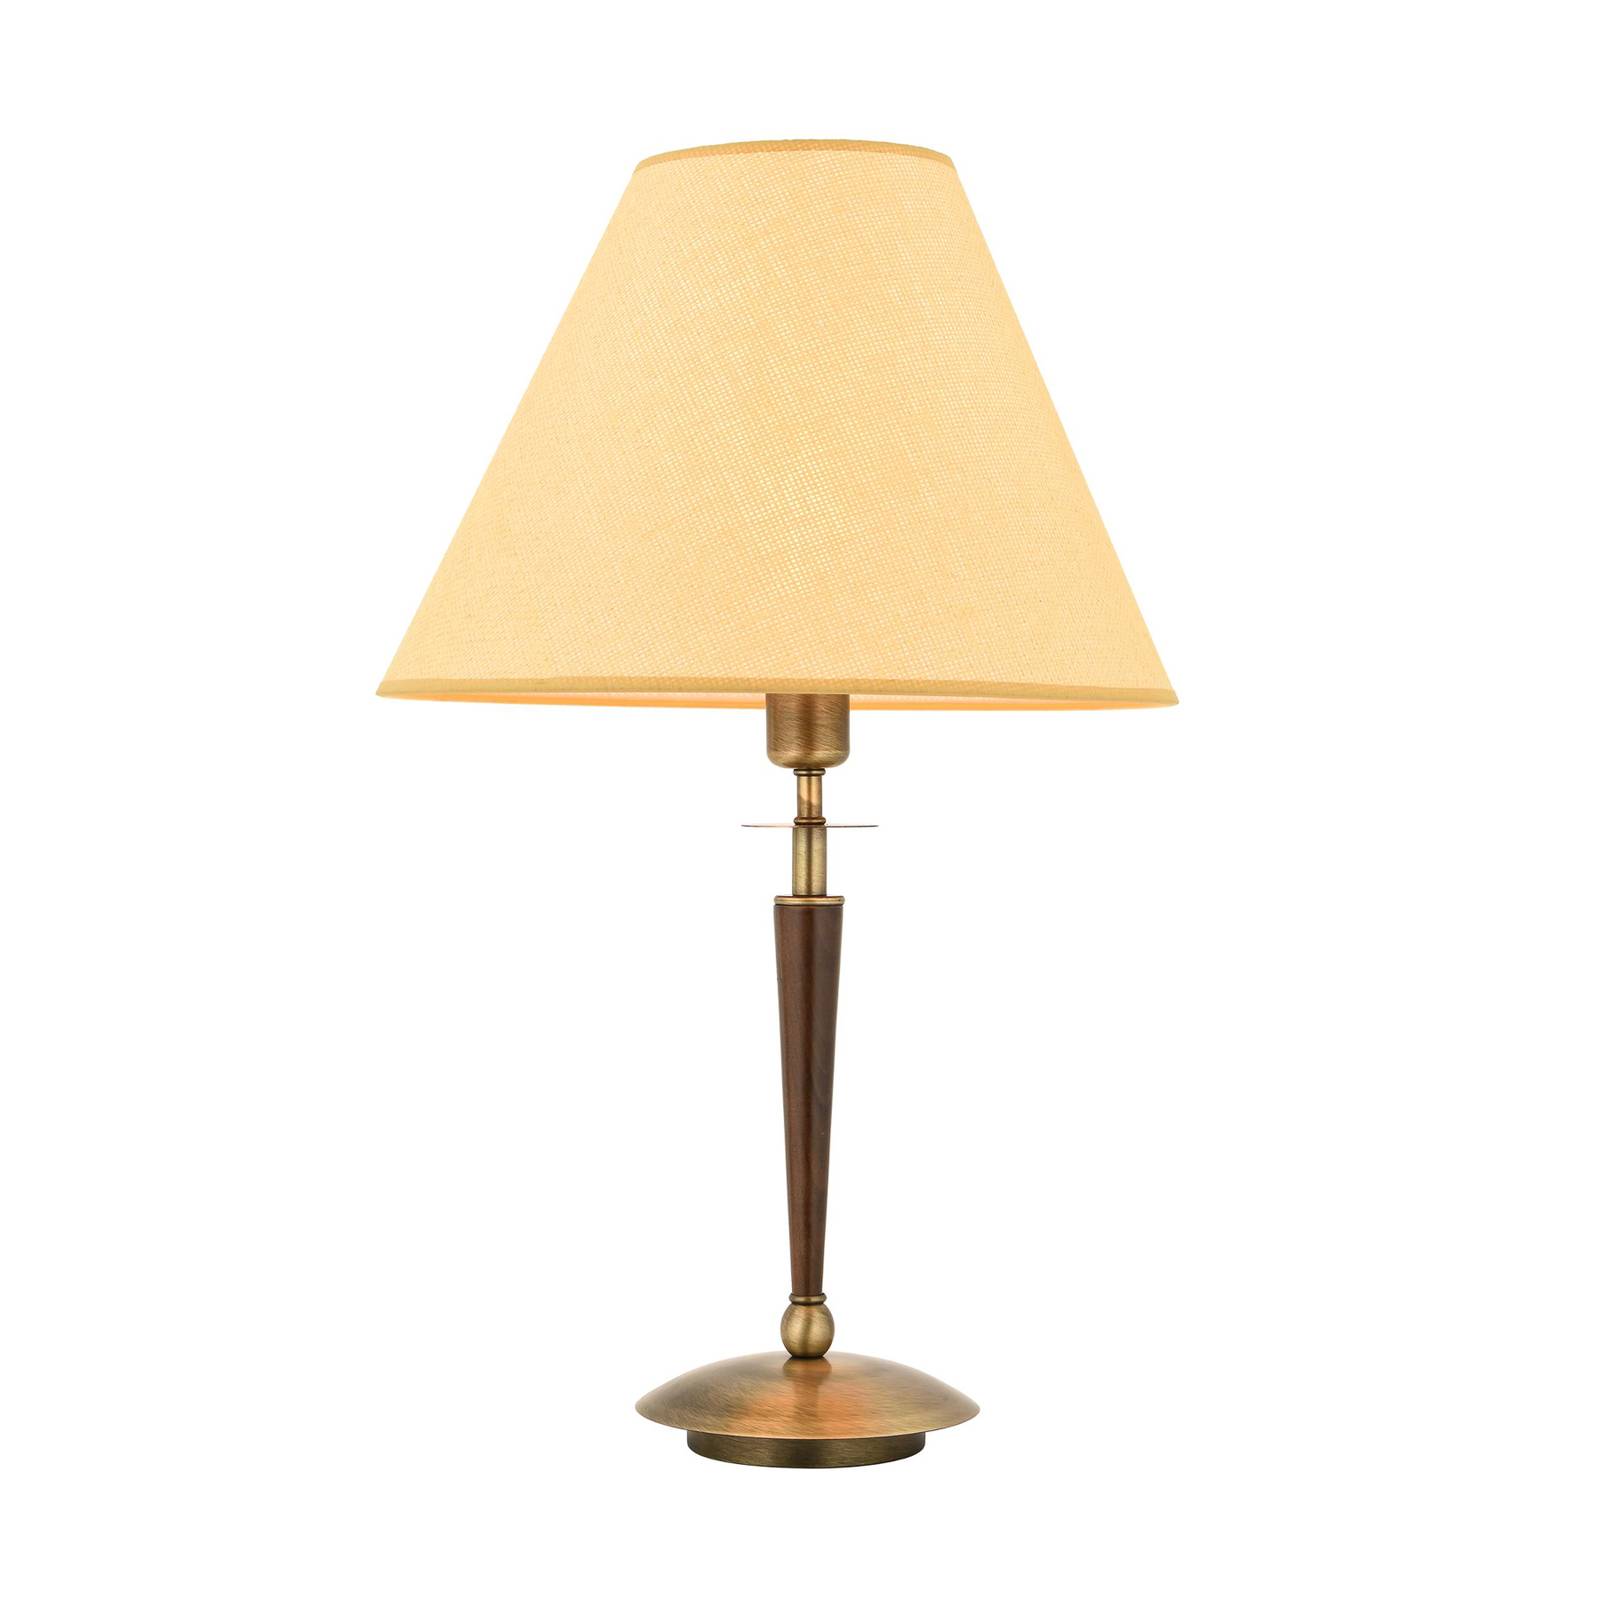 Image of Avonni Lampe à poser HML-9009-1EB avec abat-jour tissu 8698957190688